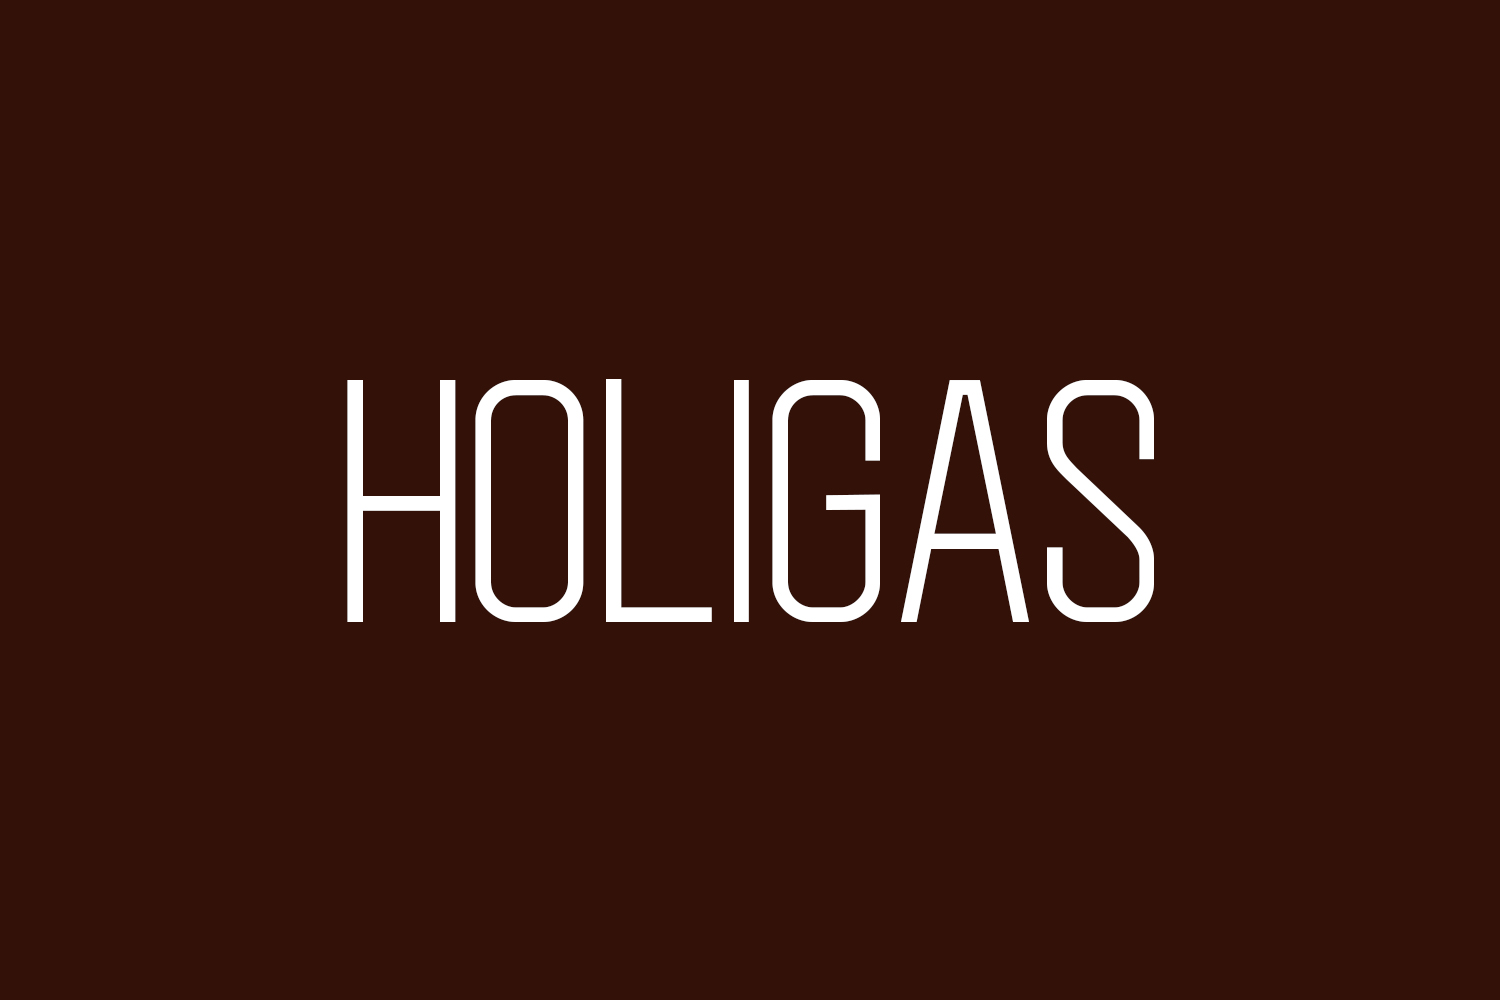 Holigas Free Font